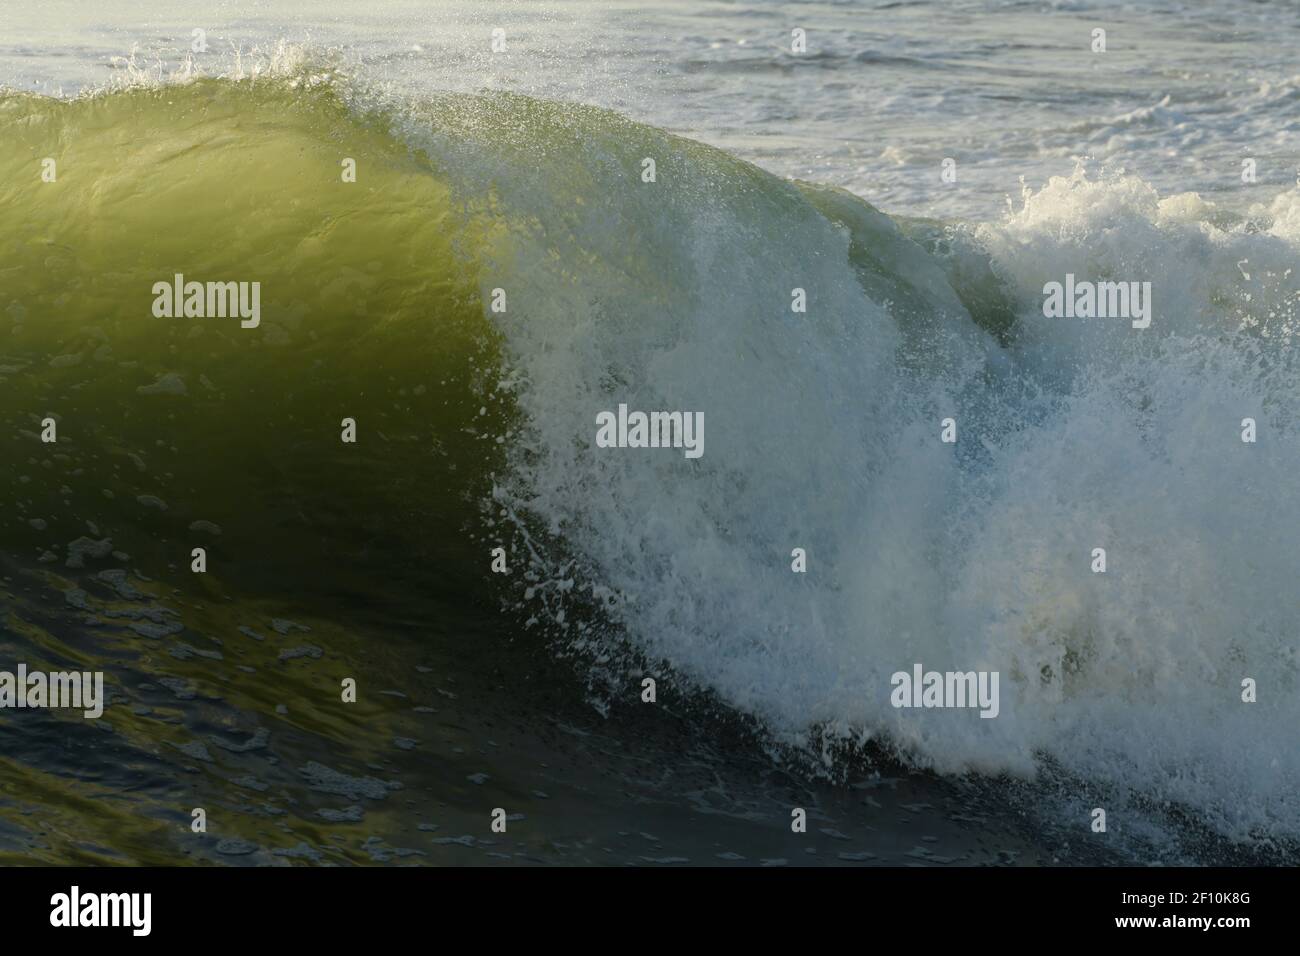 Wellen krachen, Meereslandschaft, Wellen aus der Nähe, Wasserenergie, Naturgewalt, Hintergründe, Grunge, Konzepte, Durban, Südafrika, Bewegung, Bewegung, Meer Stockfoto